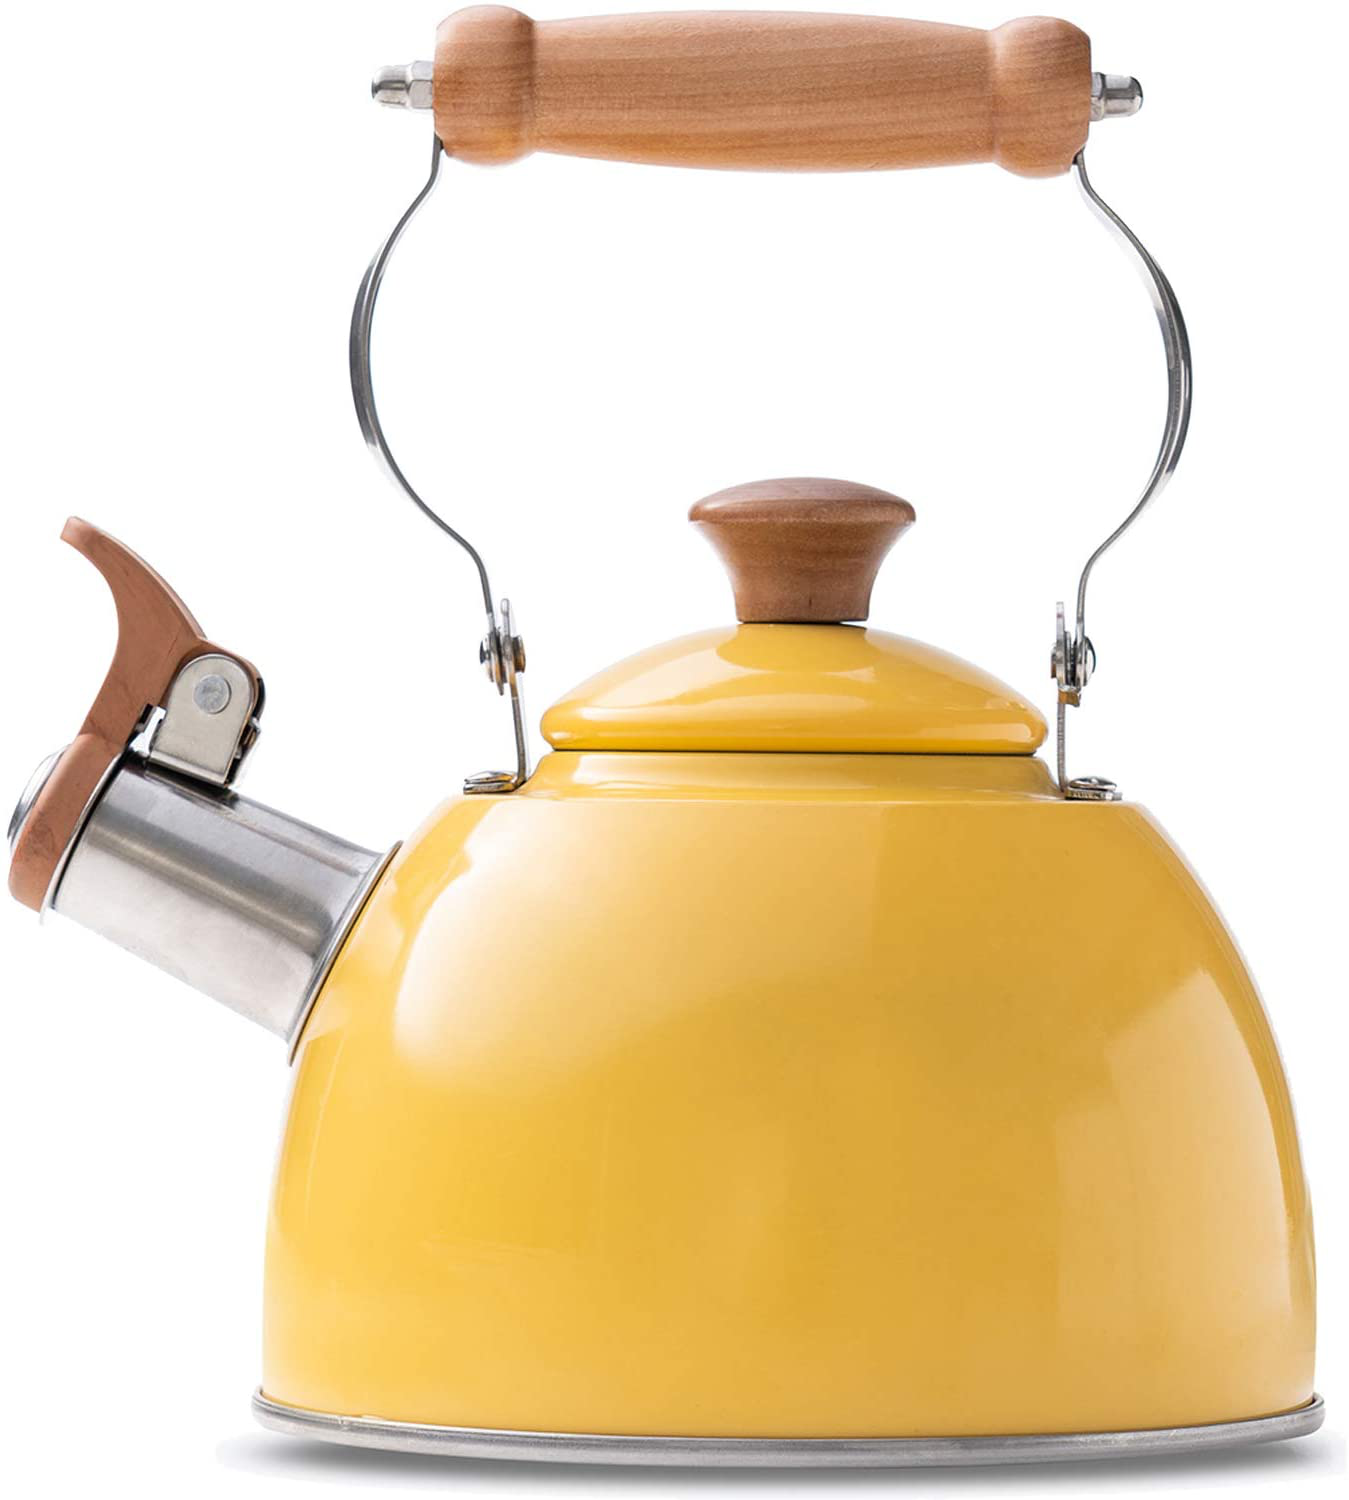 ROCKURWOK Tea Kettle Stovetop Whistling Teapot, Stainless Steel, 2.64-Quart White